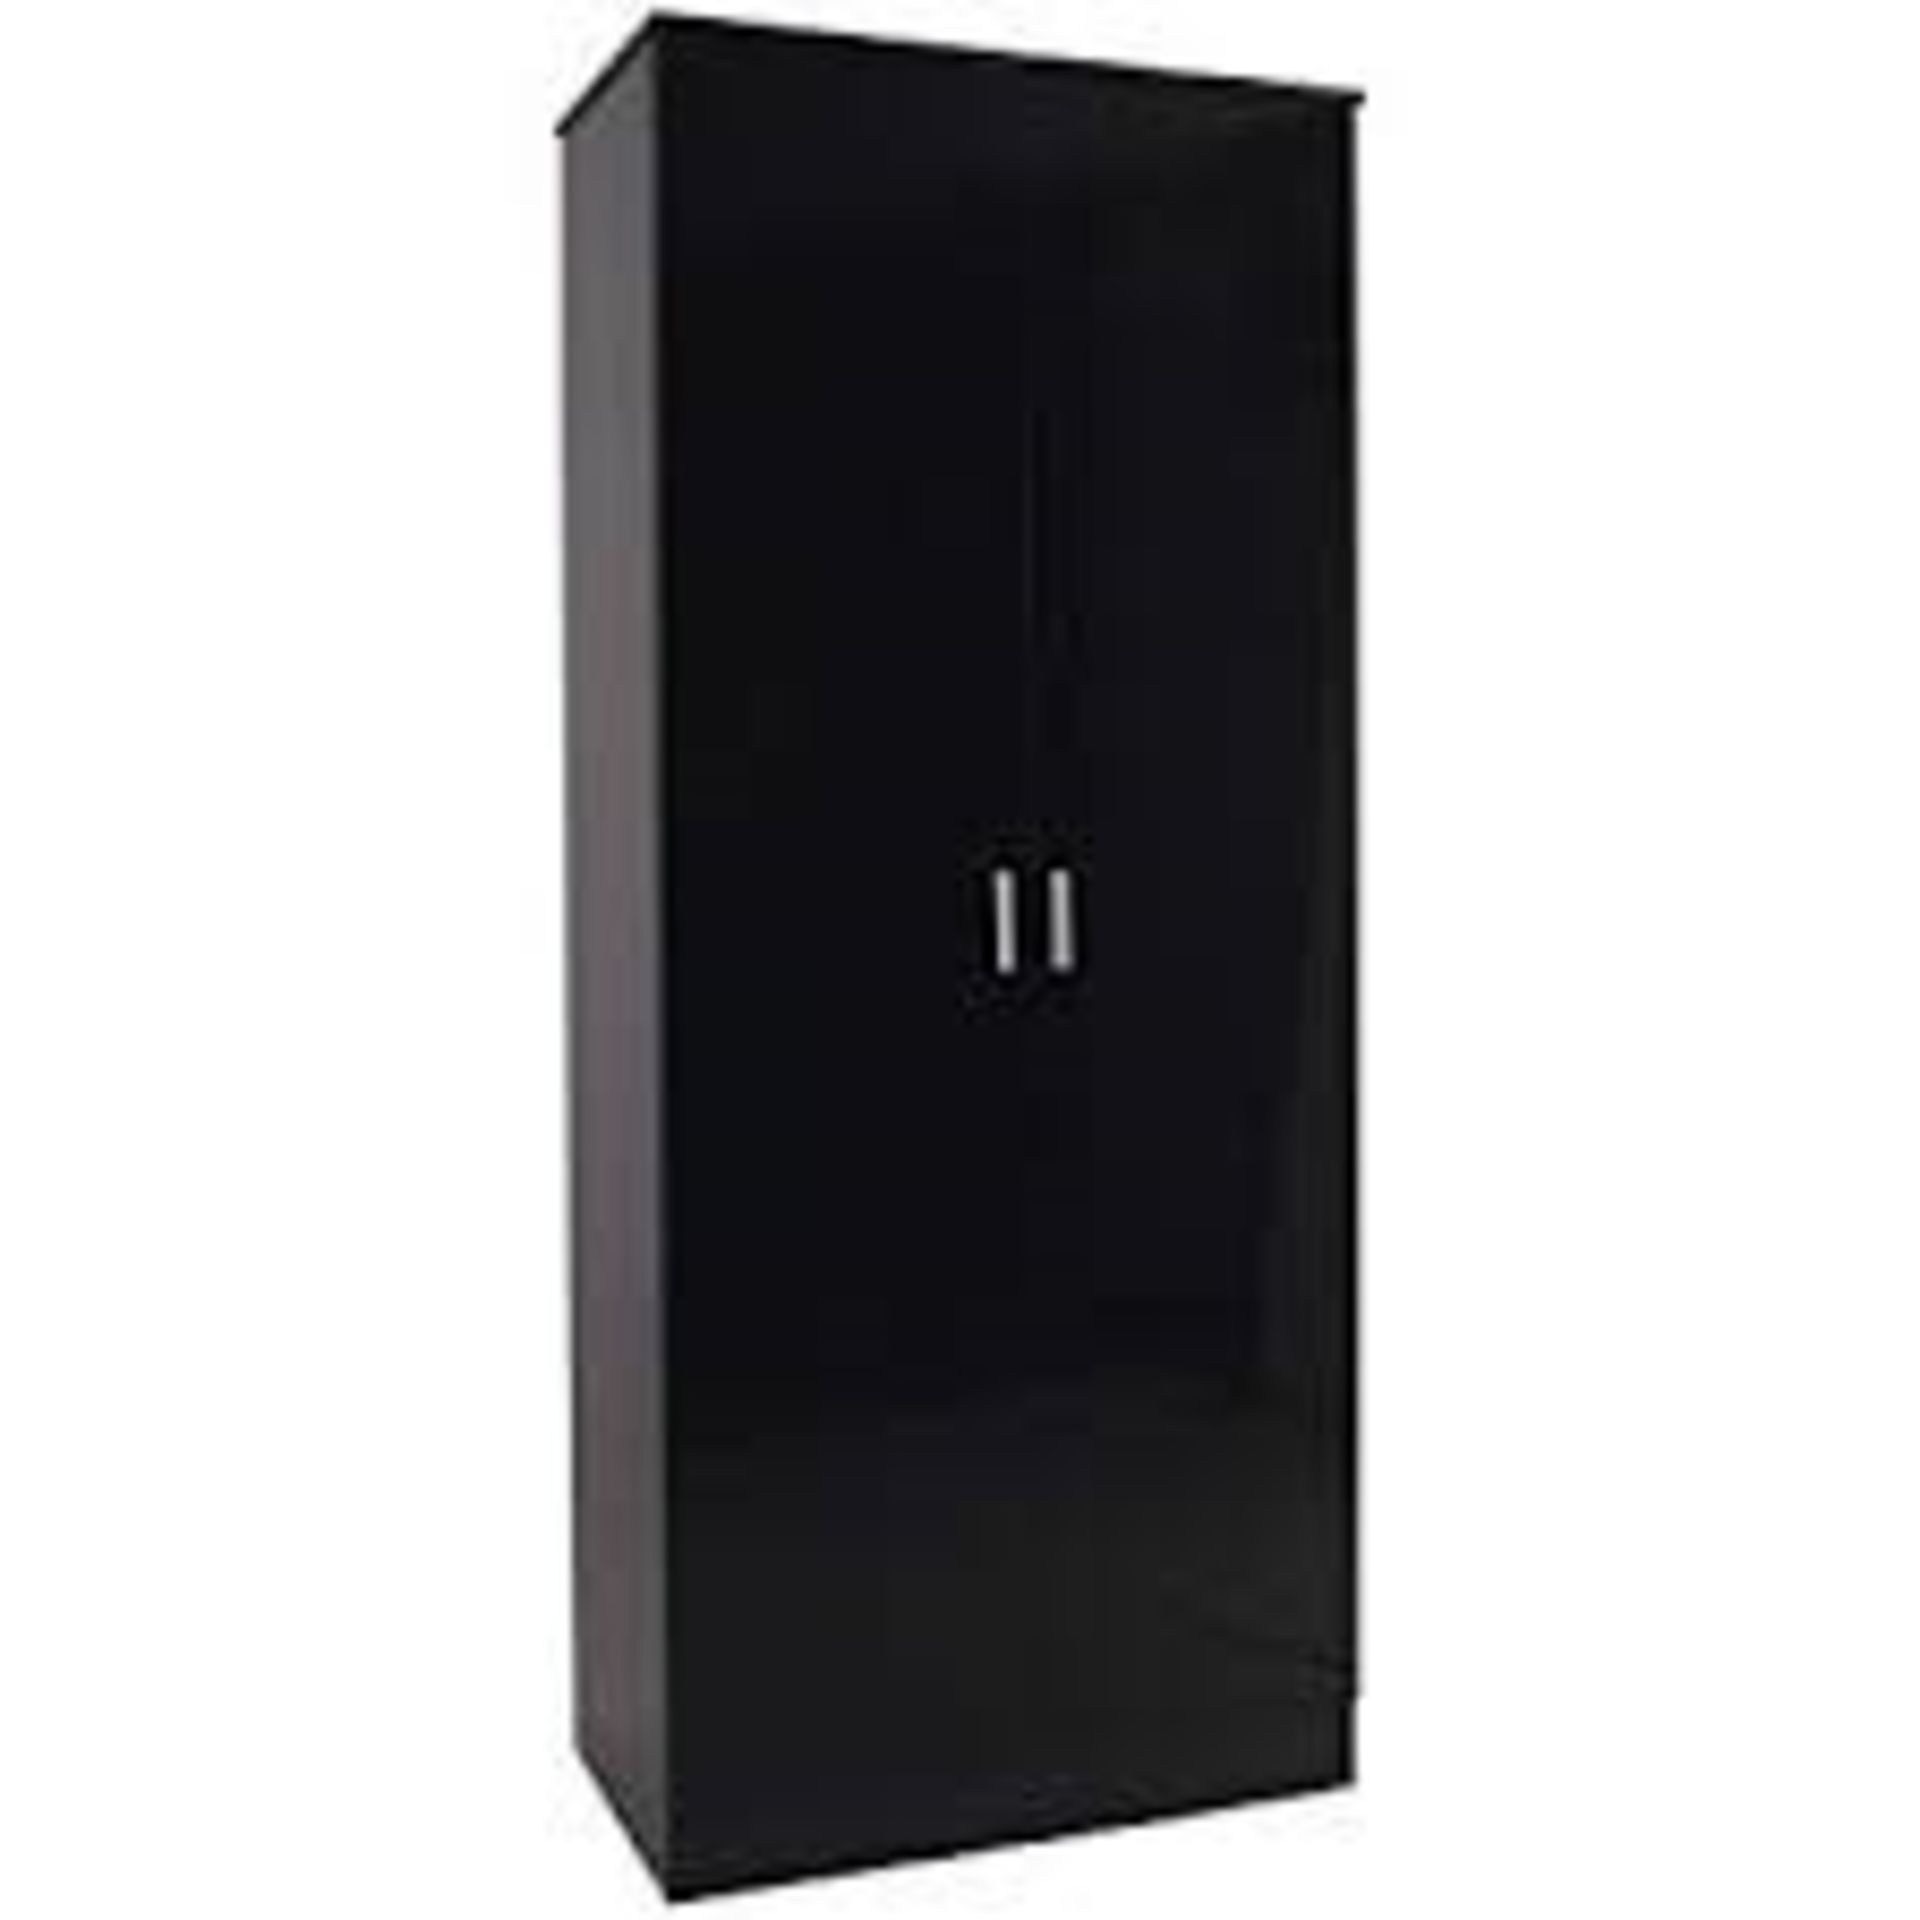 1 BOXED OTTAWA 2 TONE 2 DOOR WARDROBE IN BLACK / OTT2WDBBO / RRP £140.00 (VIEWING HIGHLY